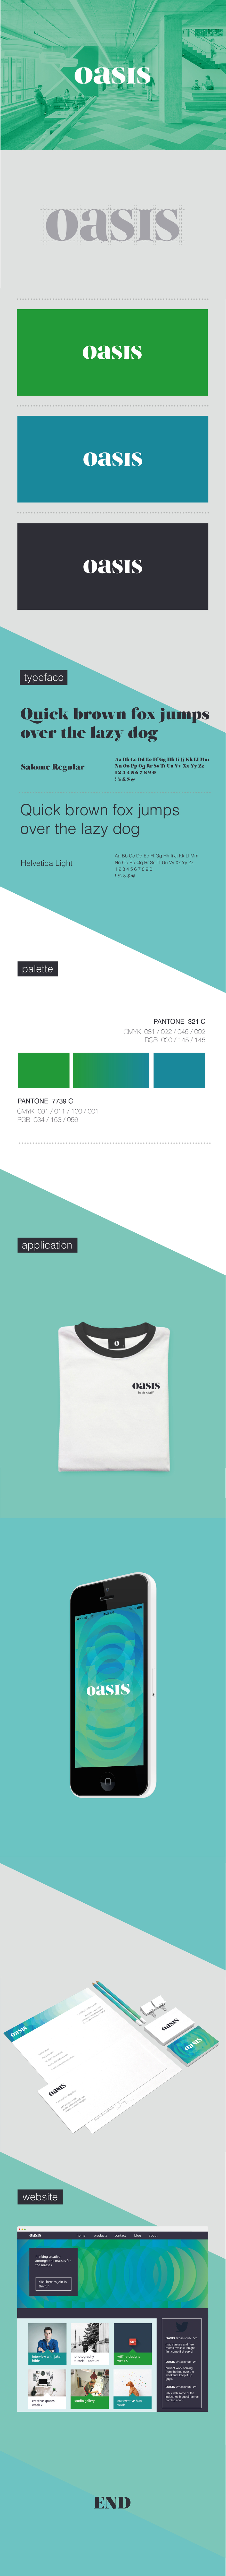 oasis brand creative Hub cool studio green awesome free Mockup mock up manchester design england